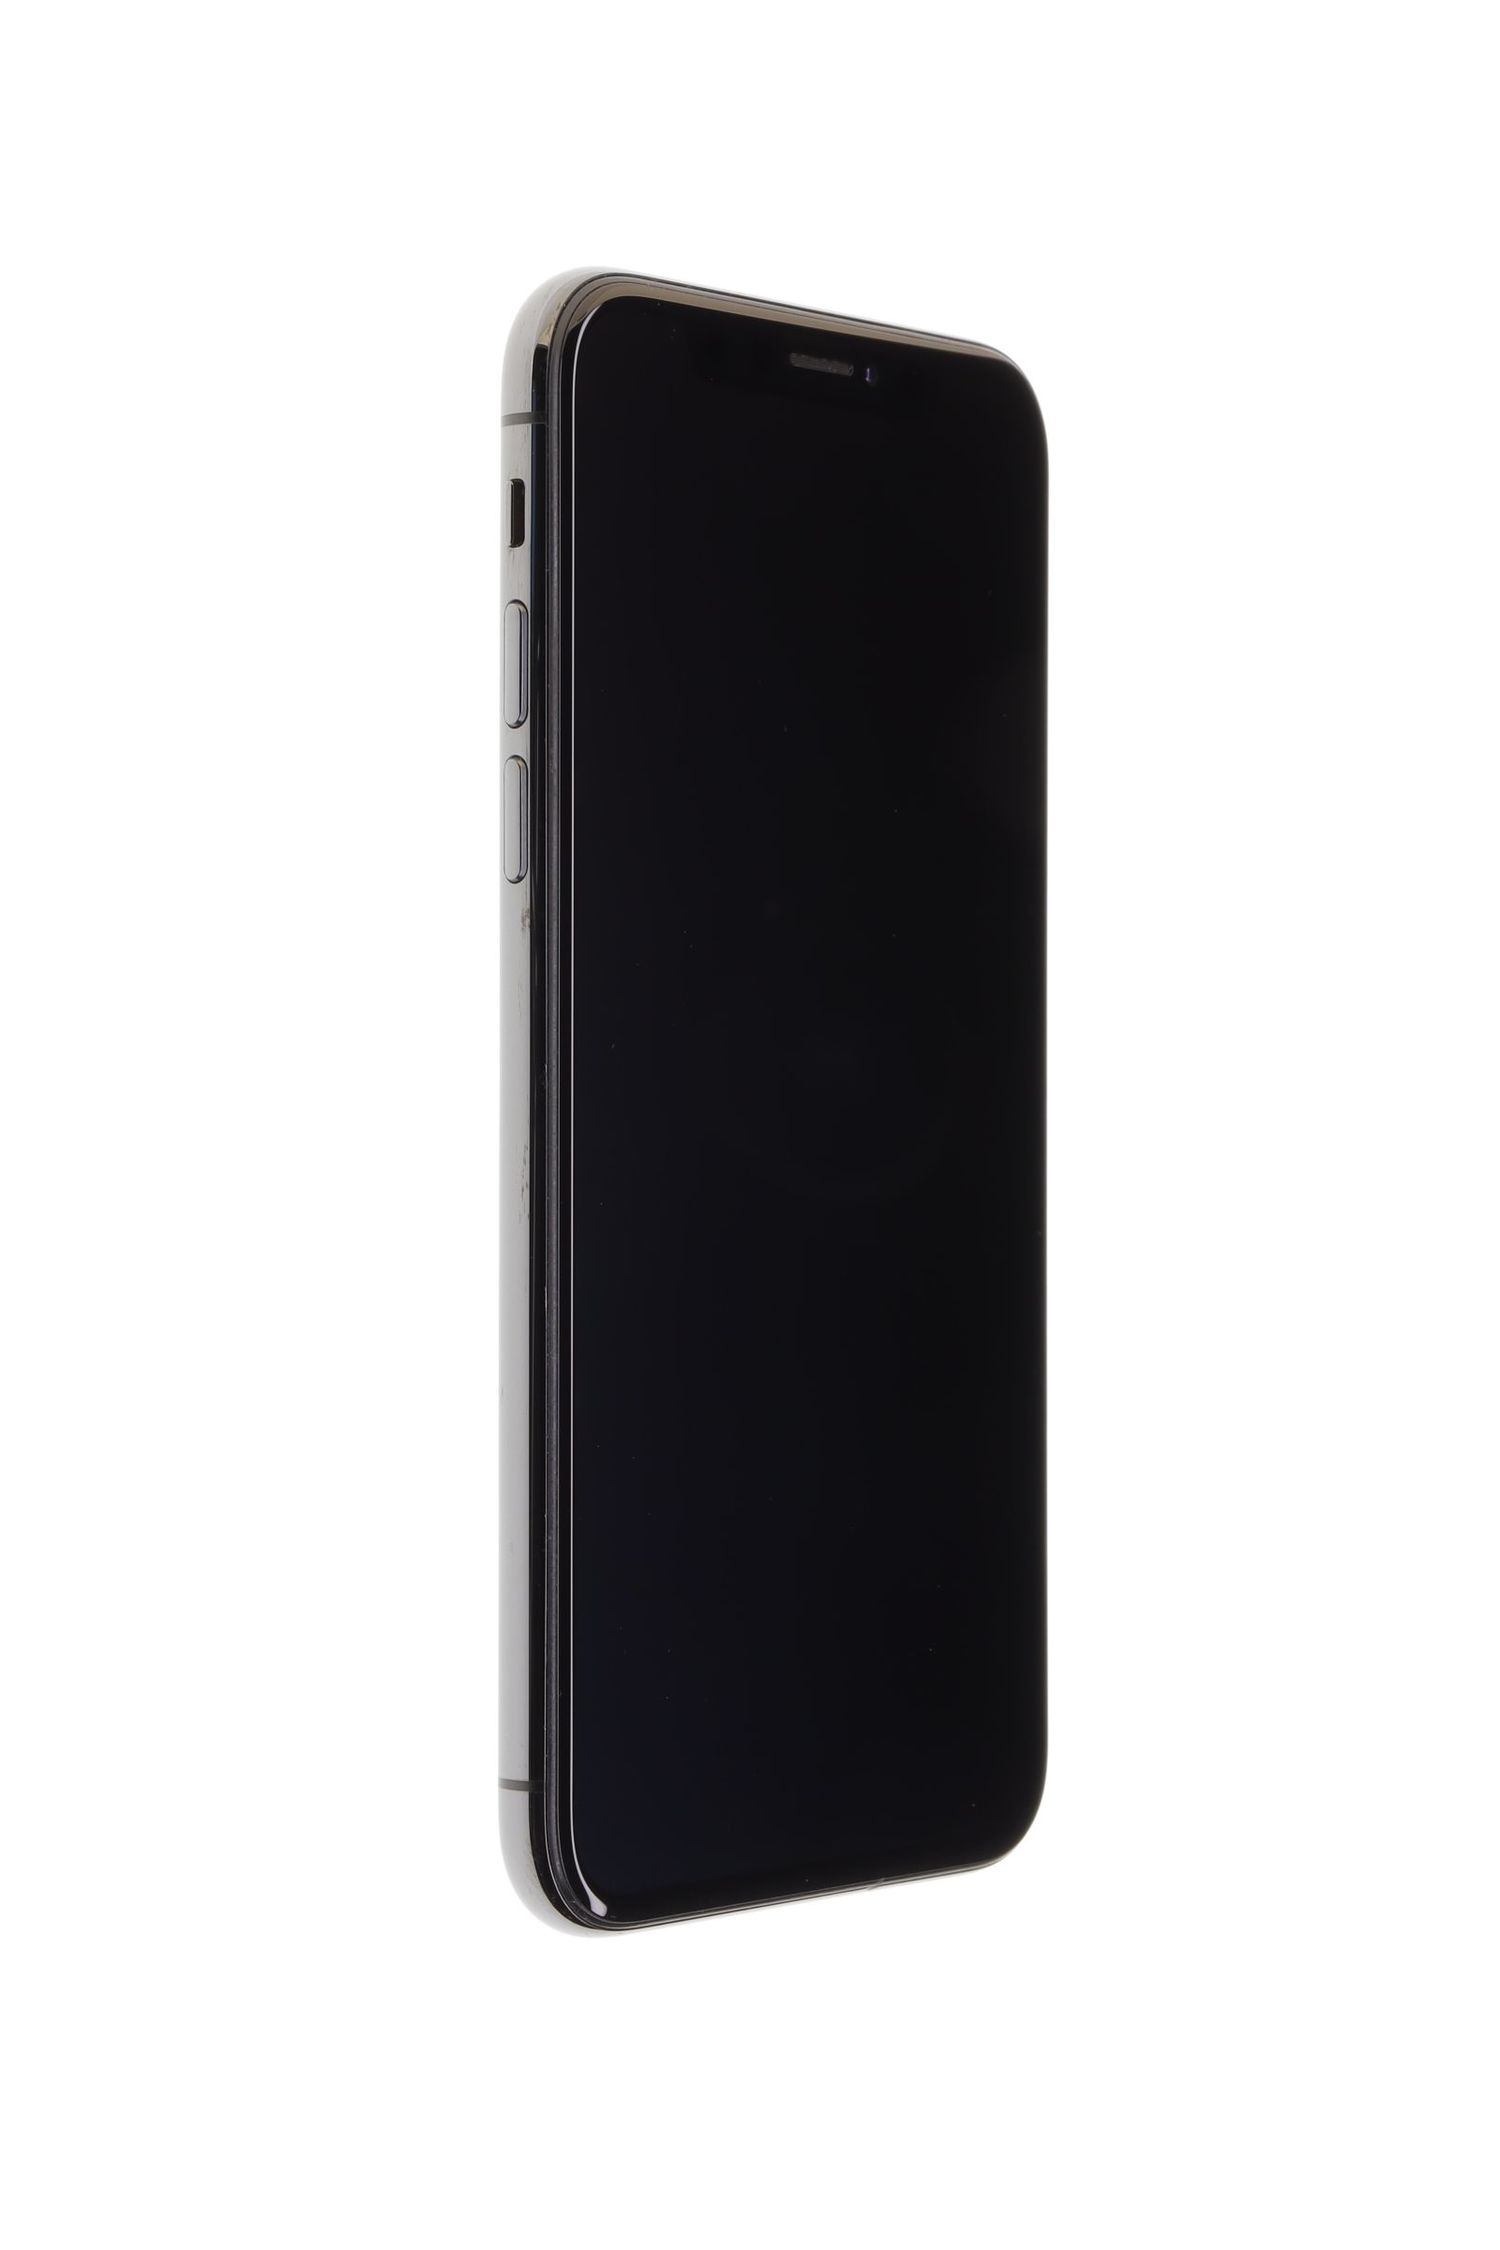 Mobiltelefon Apple iPhone X, Space Grey, 64 GB, Excelent